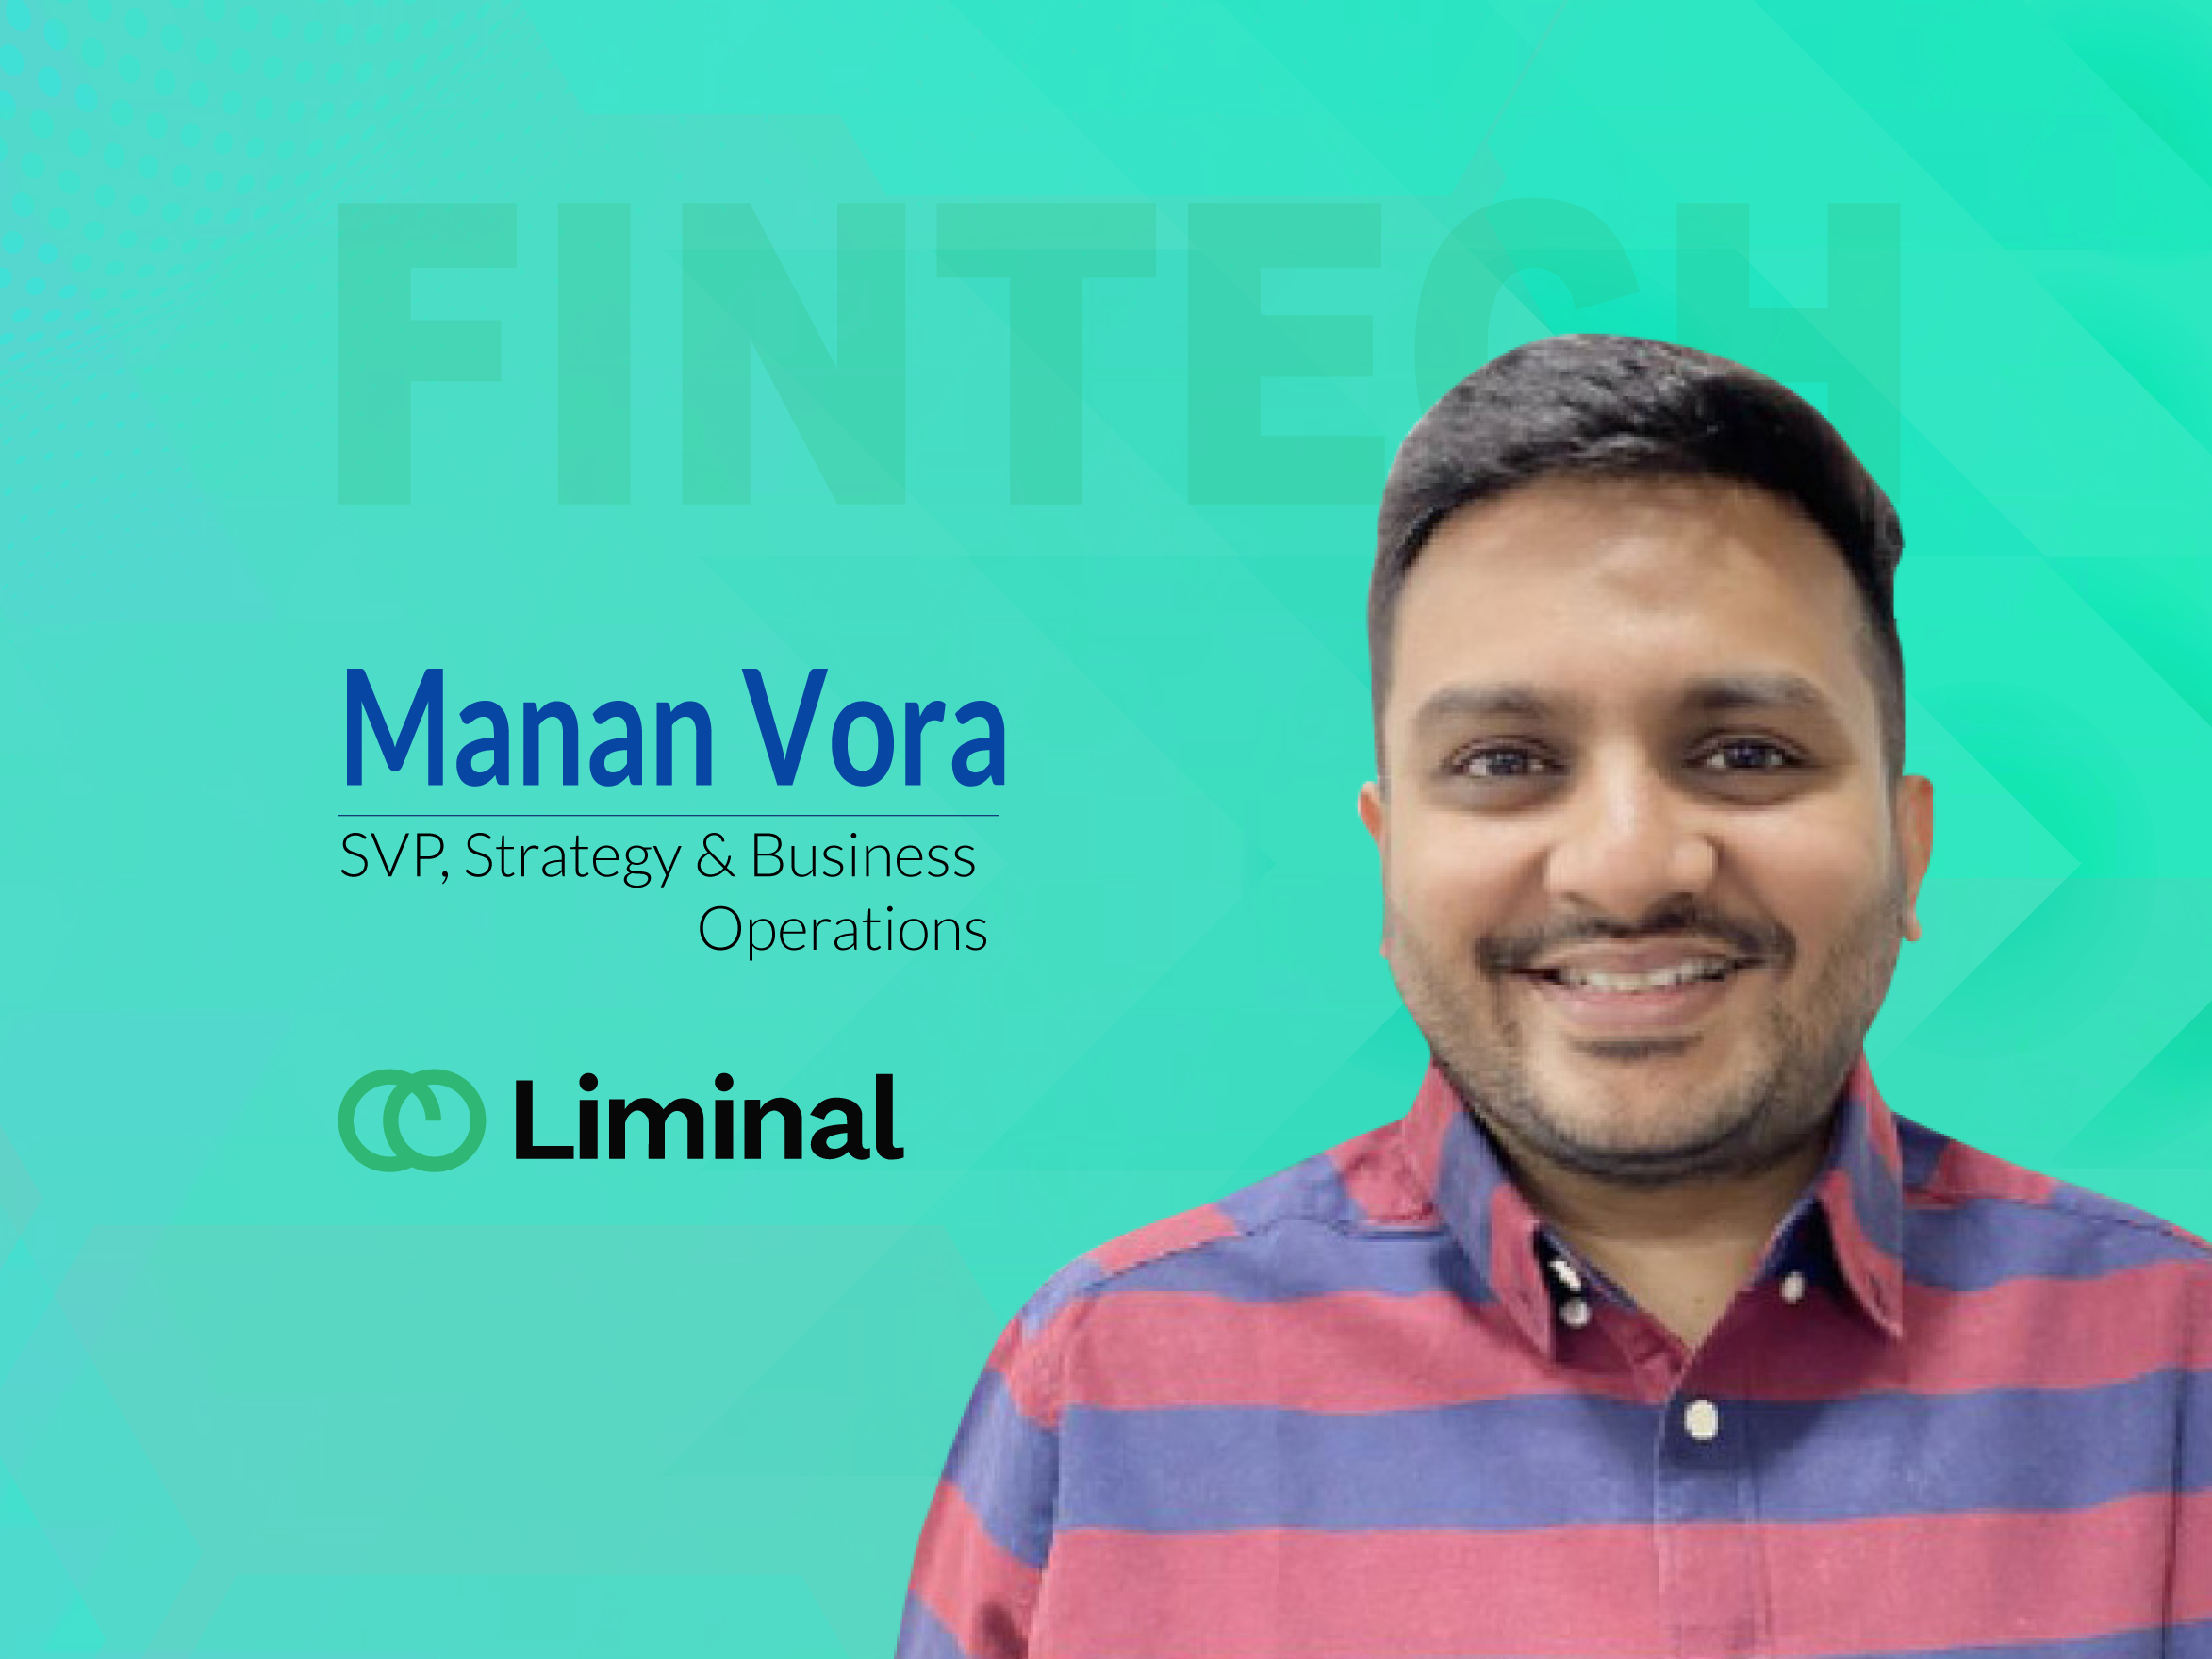 Manan Vora on LinkedIn: Global Fintech Interview with Manan Vora